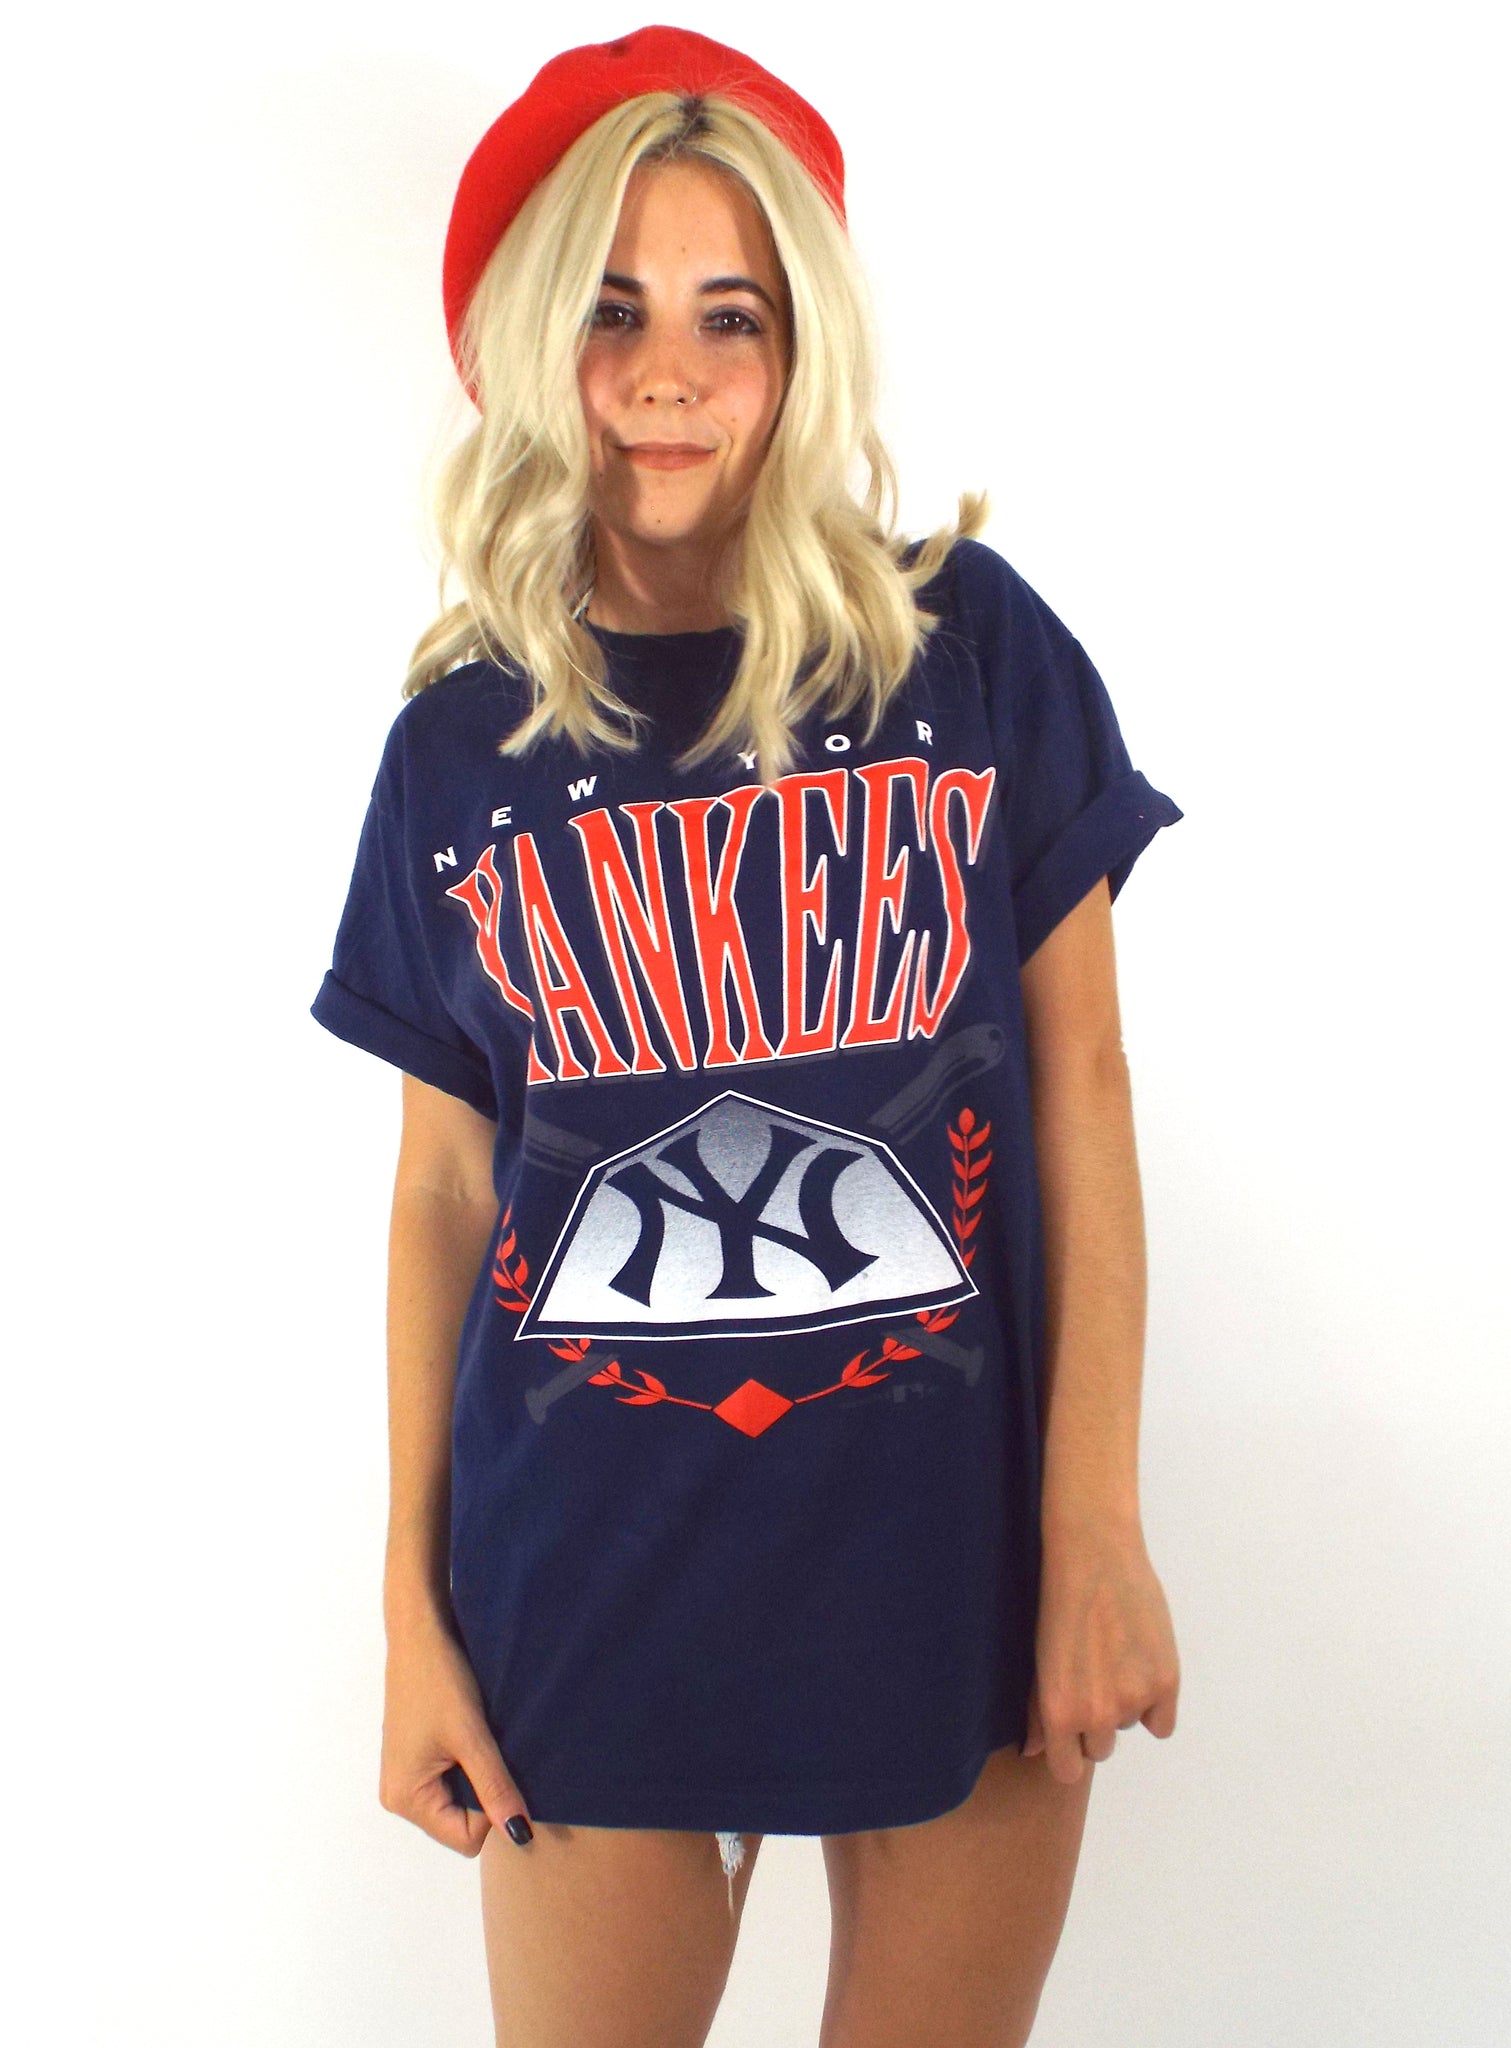 New York Yankees T-Shirt